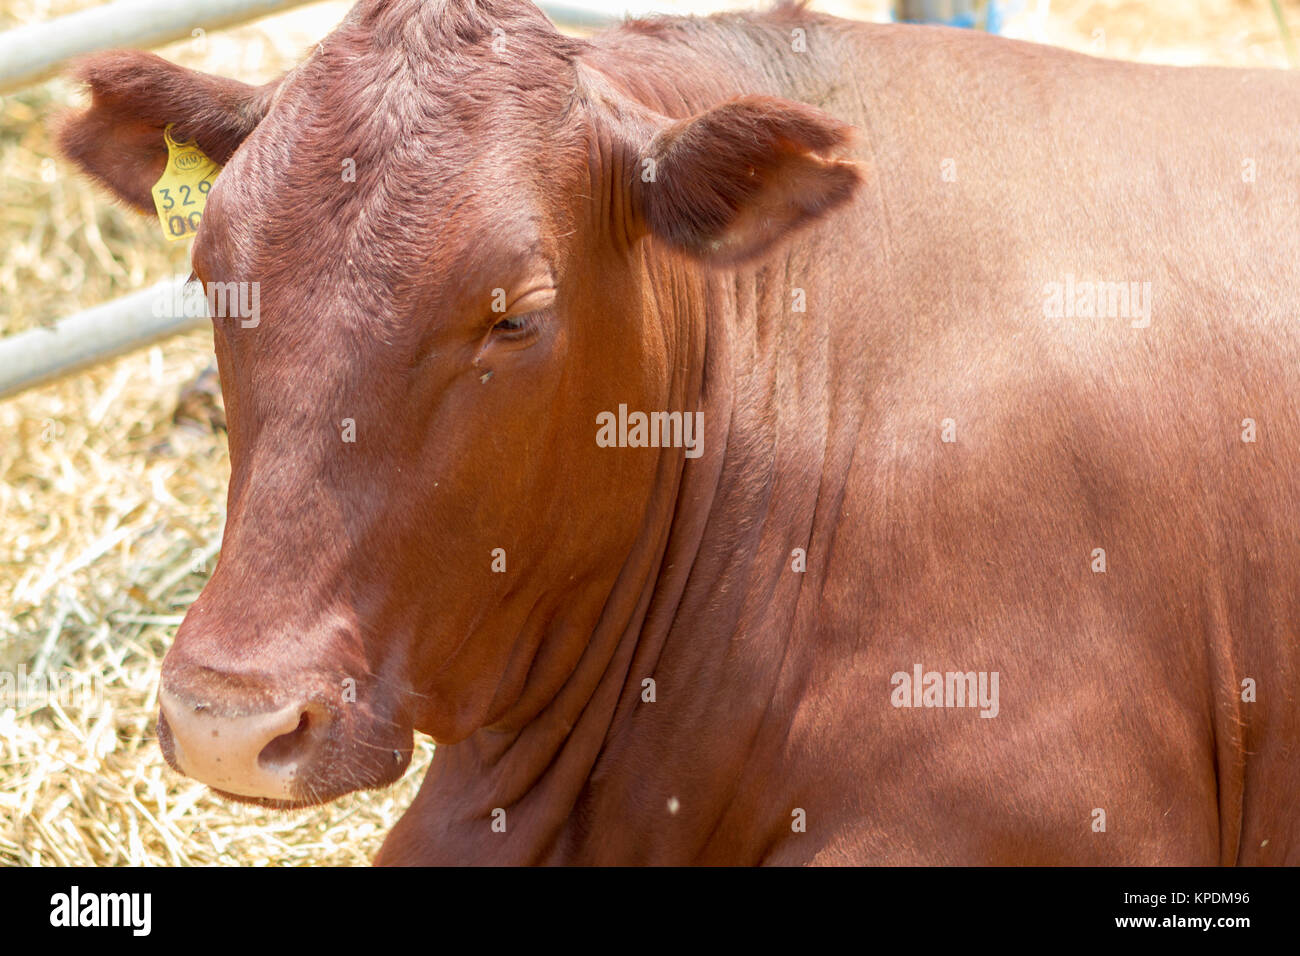 Close up of bovine Stock Photo